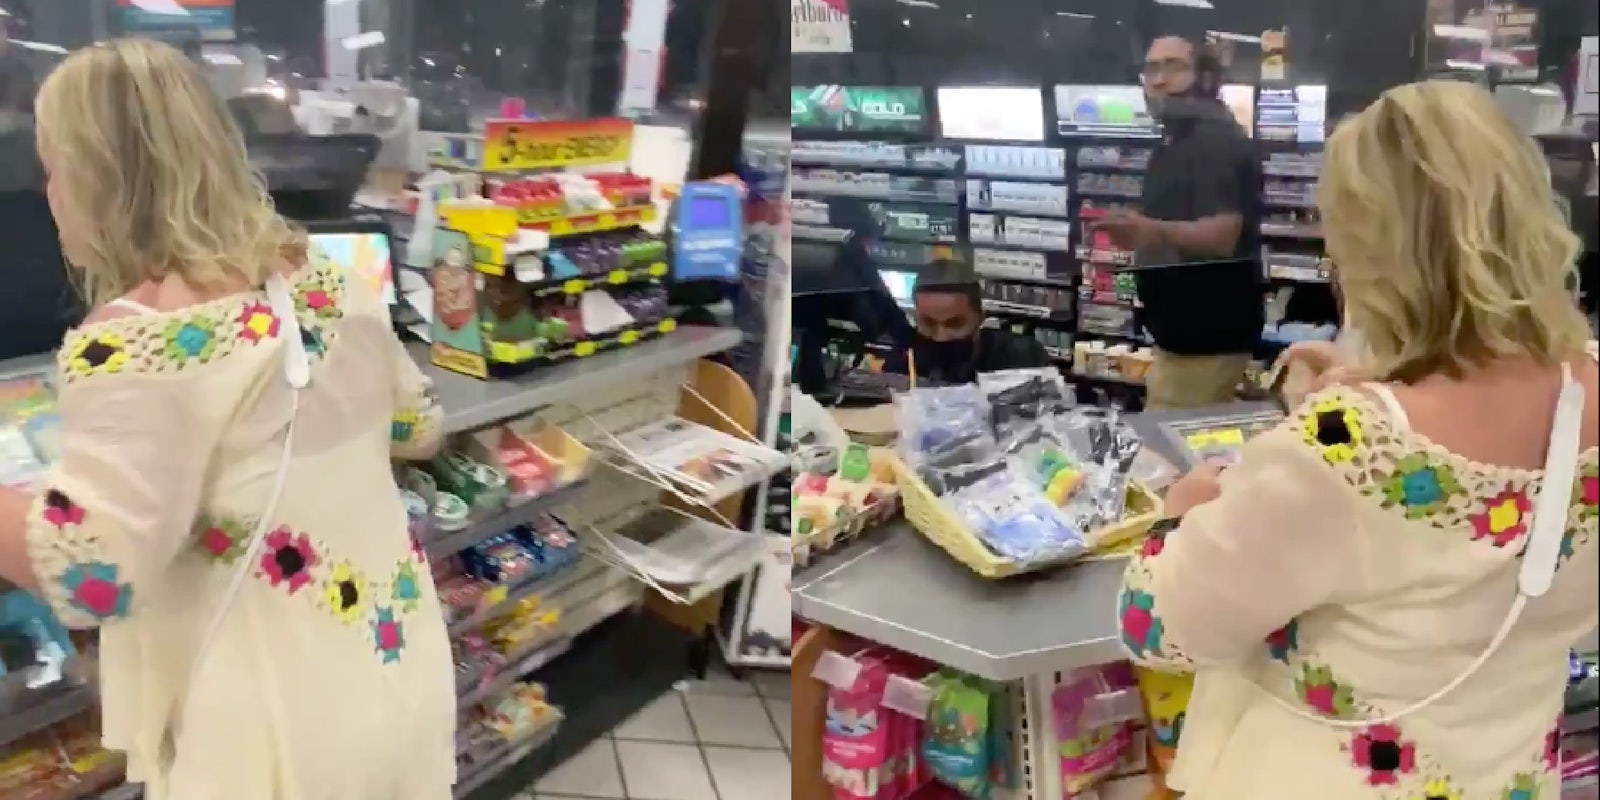 video shows karen spitting on gas station worker